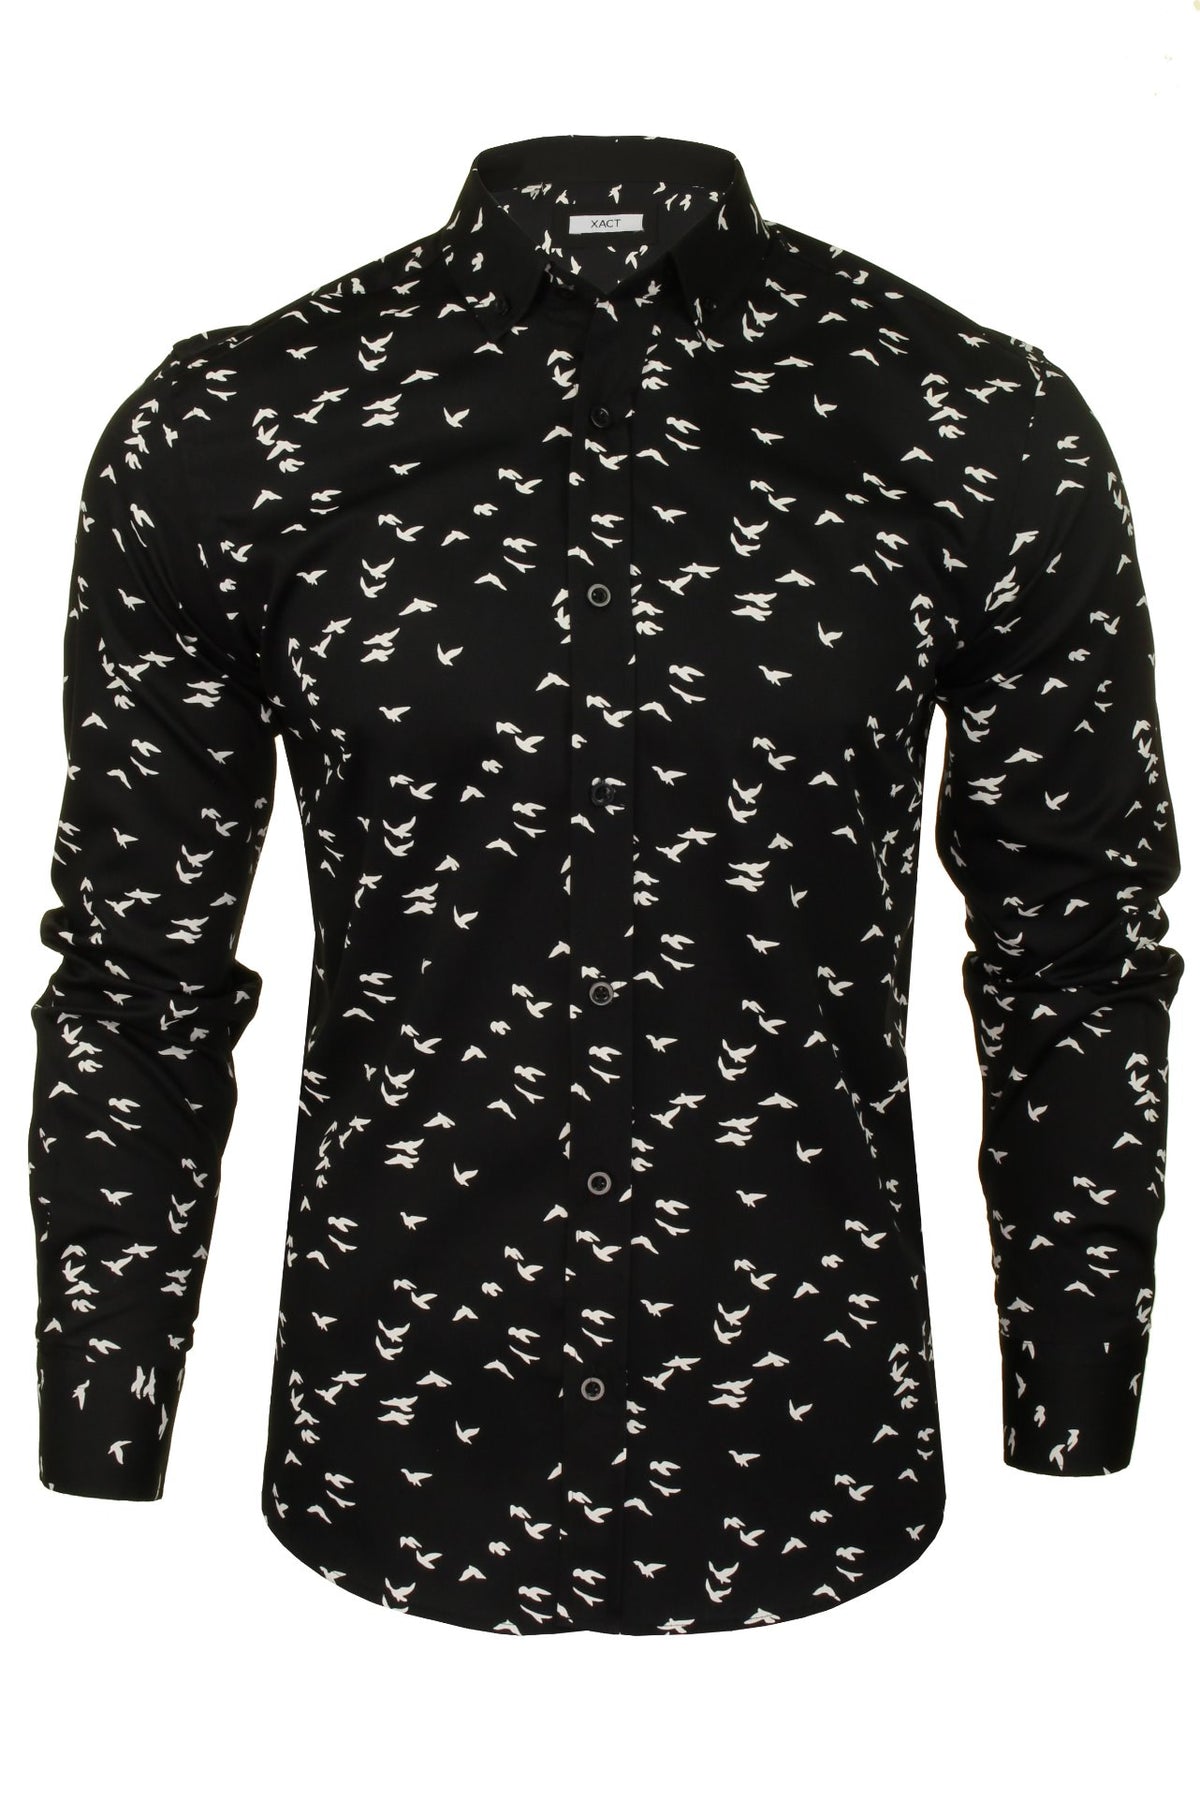 Xact Men's Cotton Bird Print Long Sleeved Shirt, 01, Xsh1083, Black